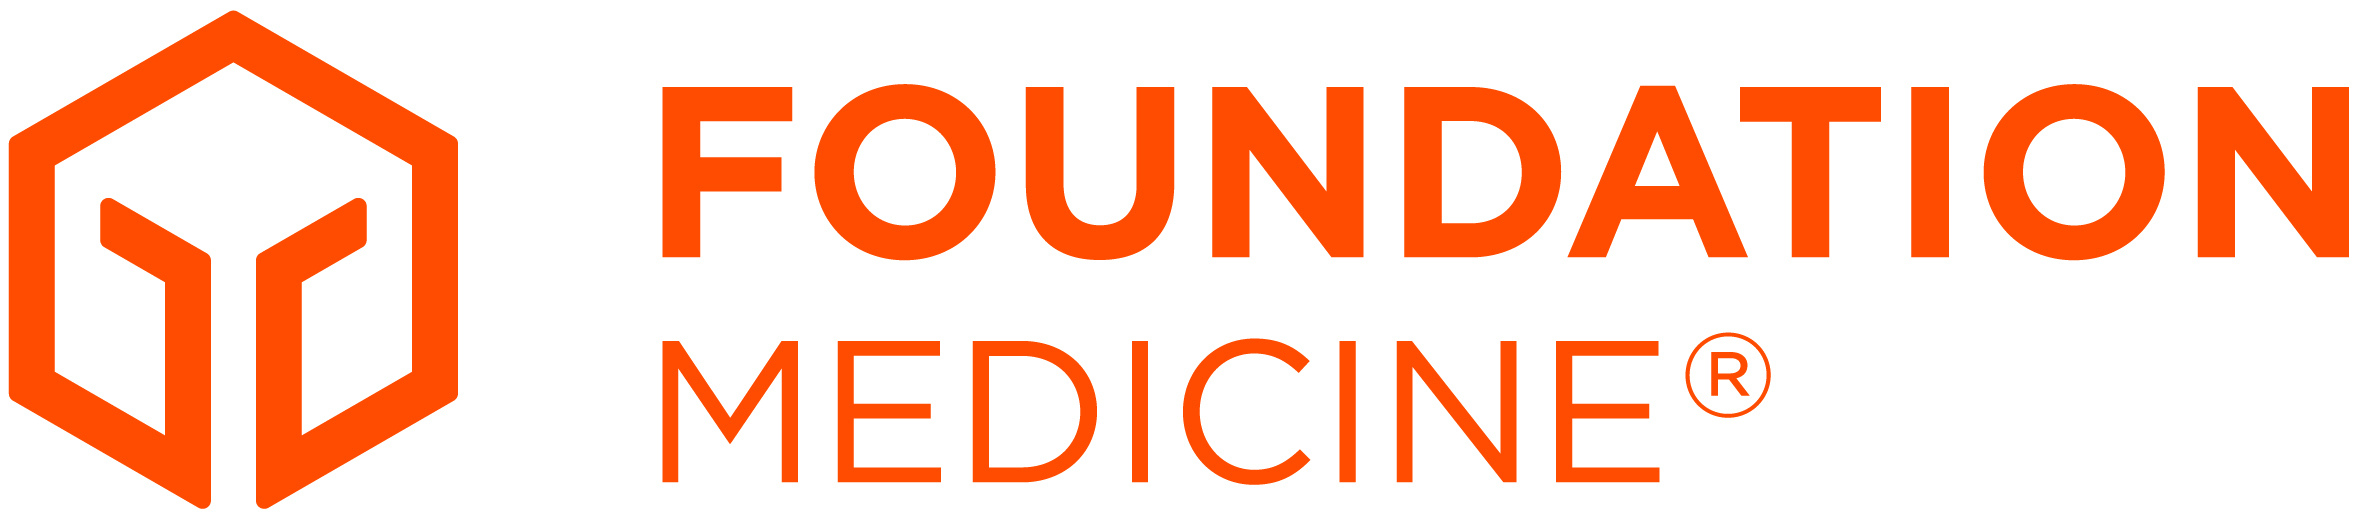 foundation medicine - partner logo